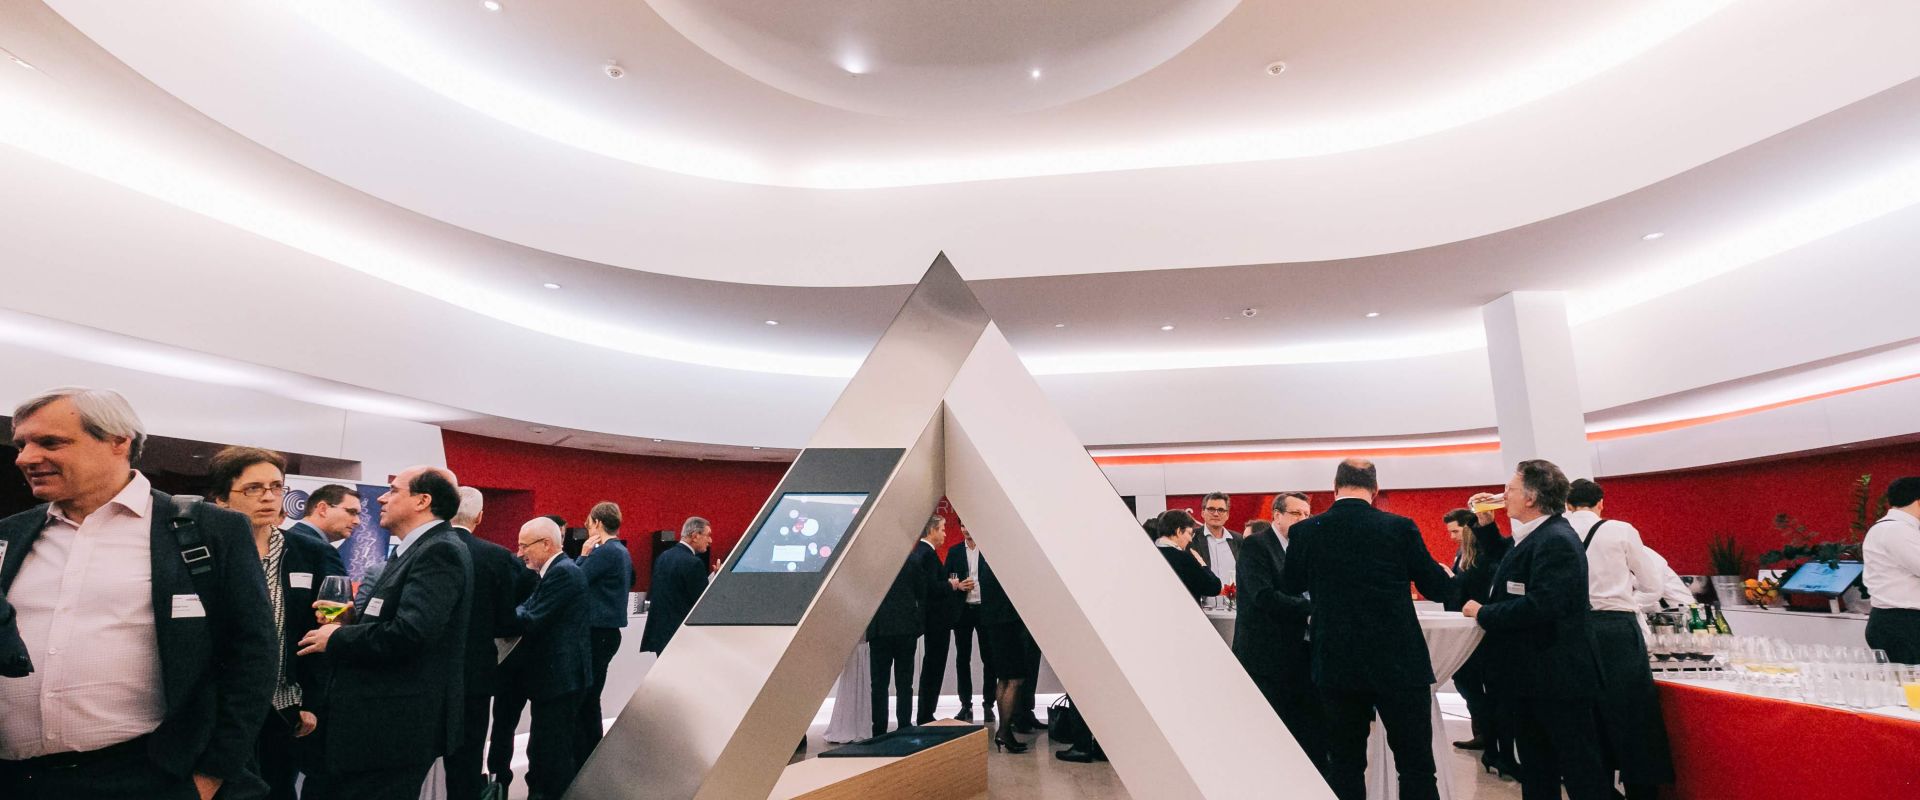 Austrian Standards Headquarters interactive exhibition